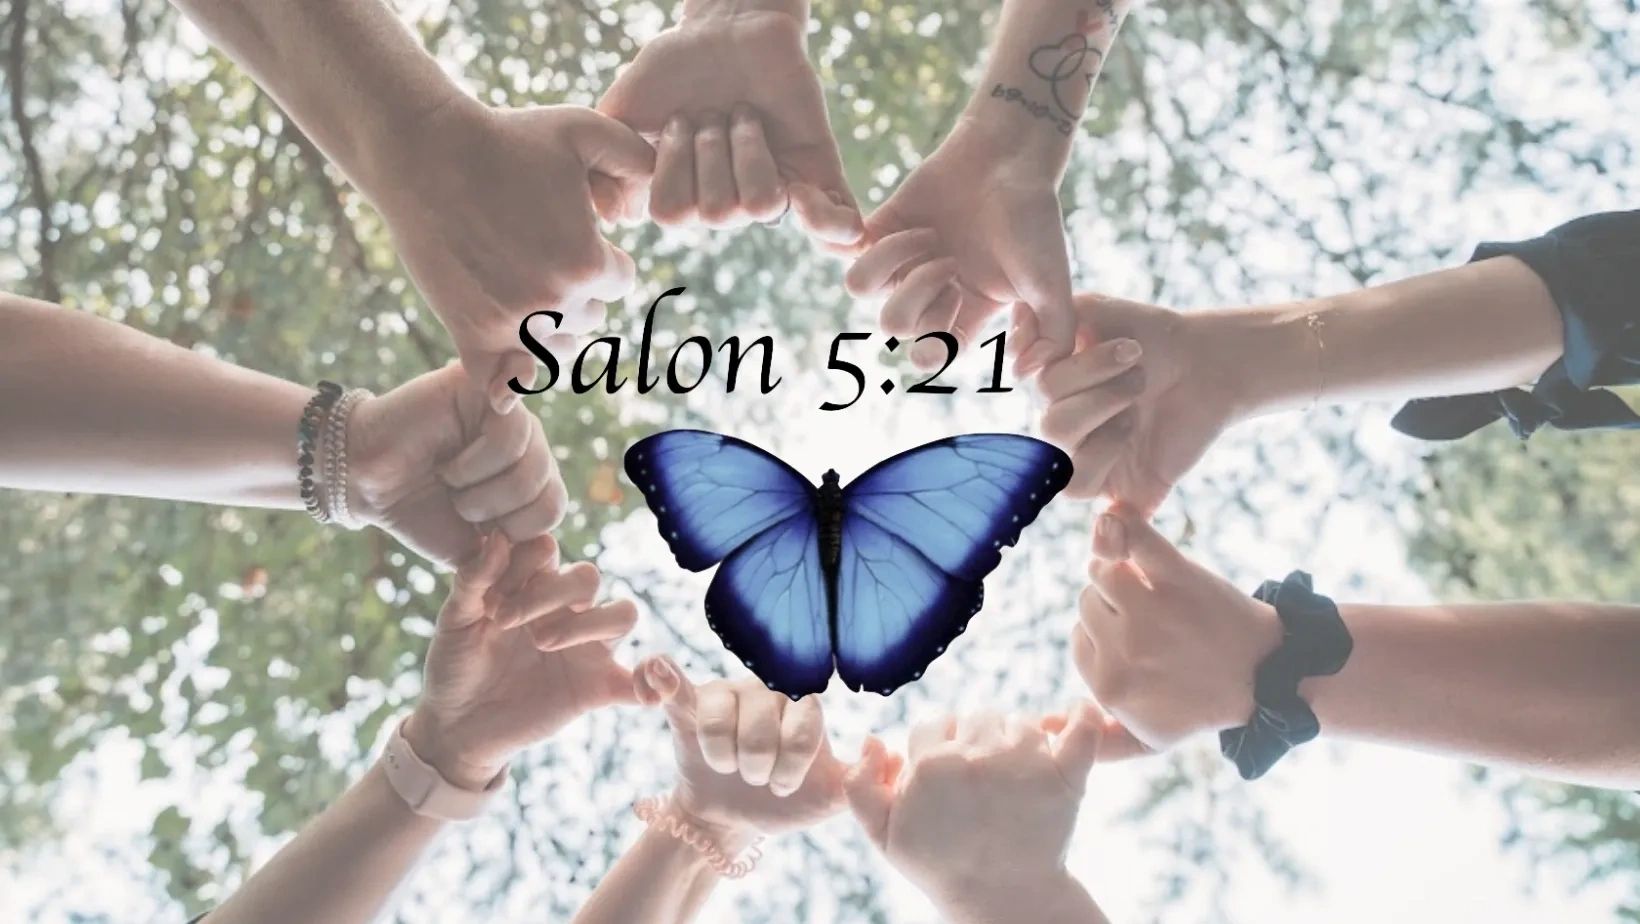 SALON 521 LLC